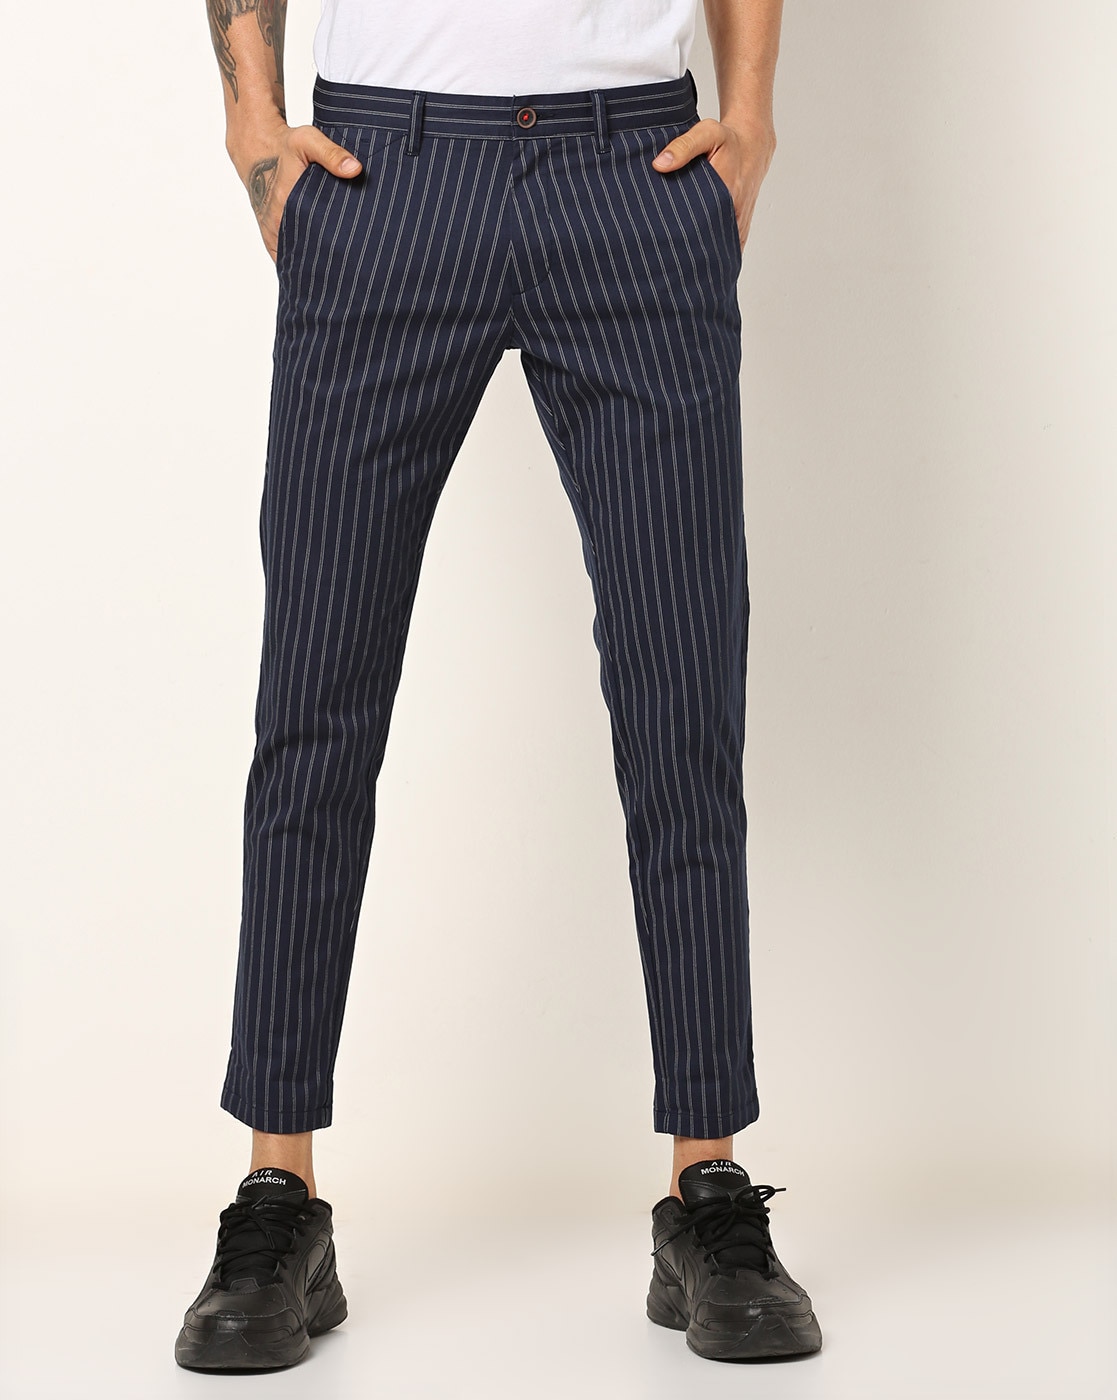 Formal Wear Strips Mens Cotton Striped Trousers Size 2834